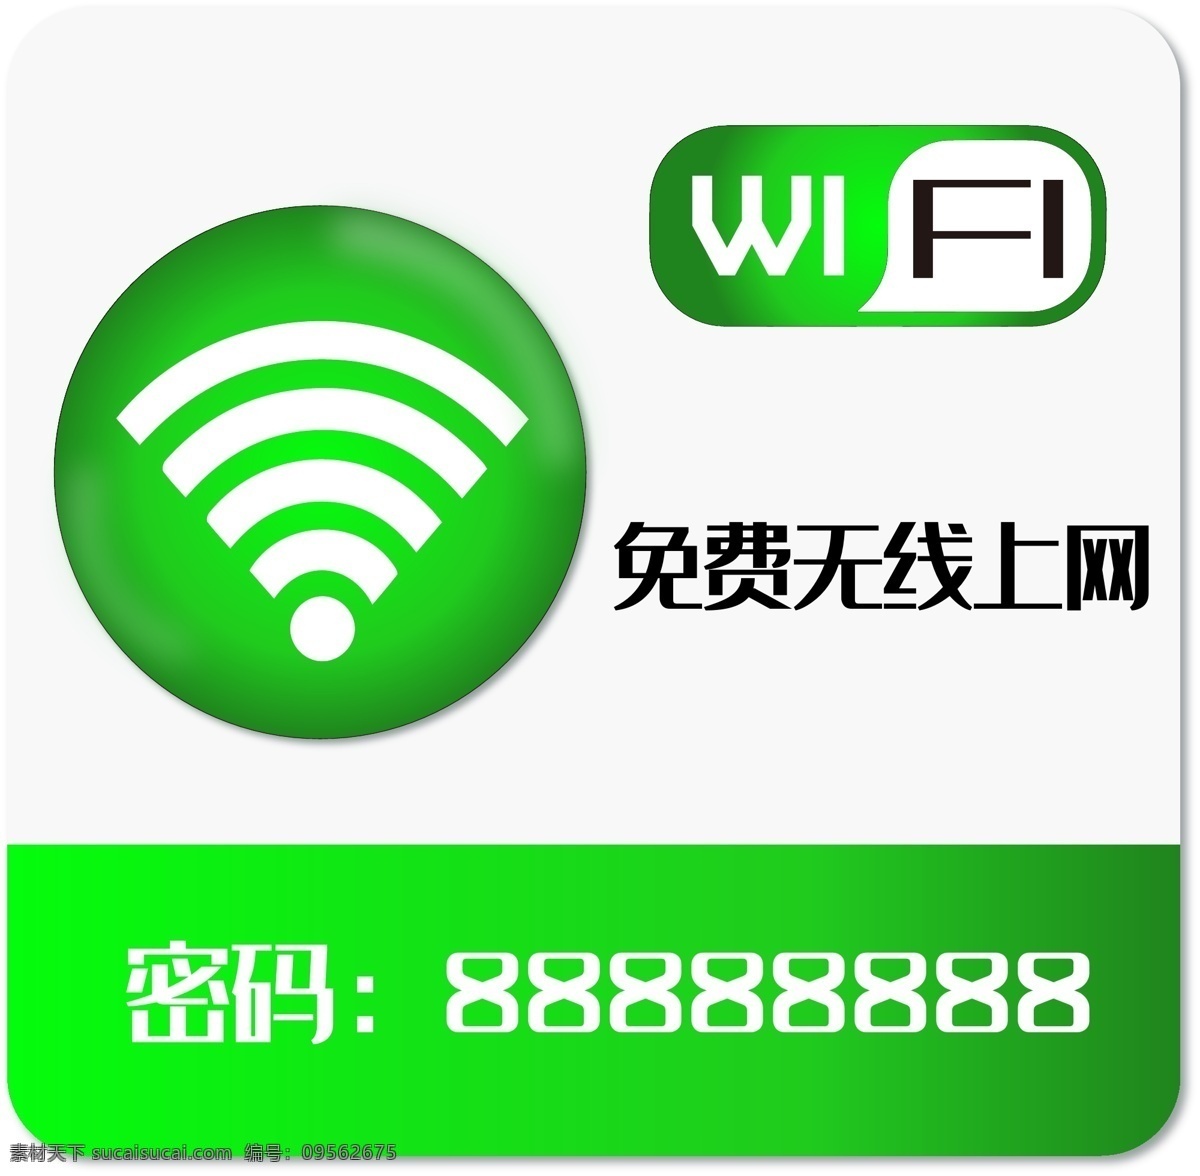 wifi图标 免费wifi 邮政wifi 邮政标识 无线上网 wifi标识 绿色 展板模板